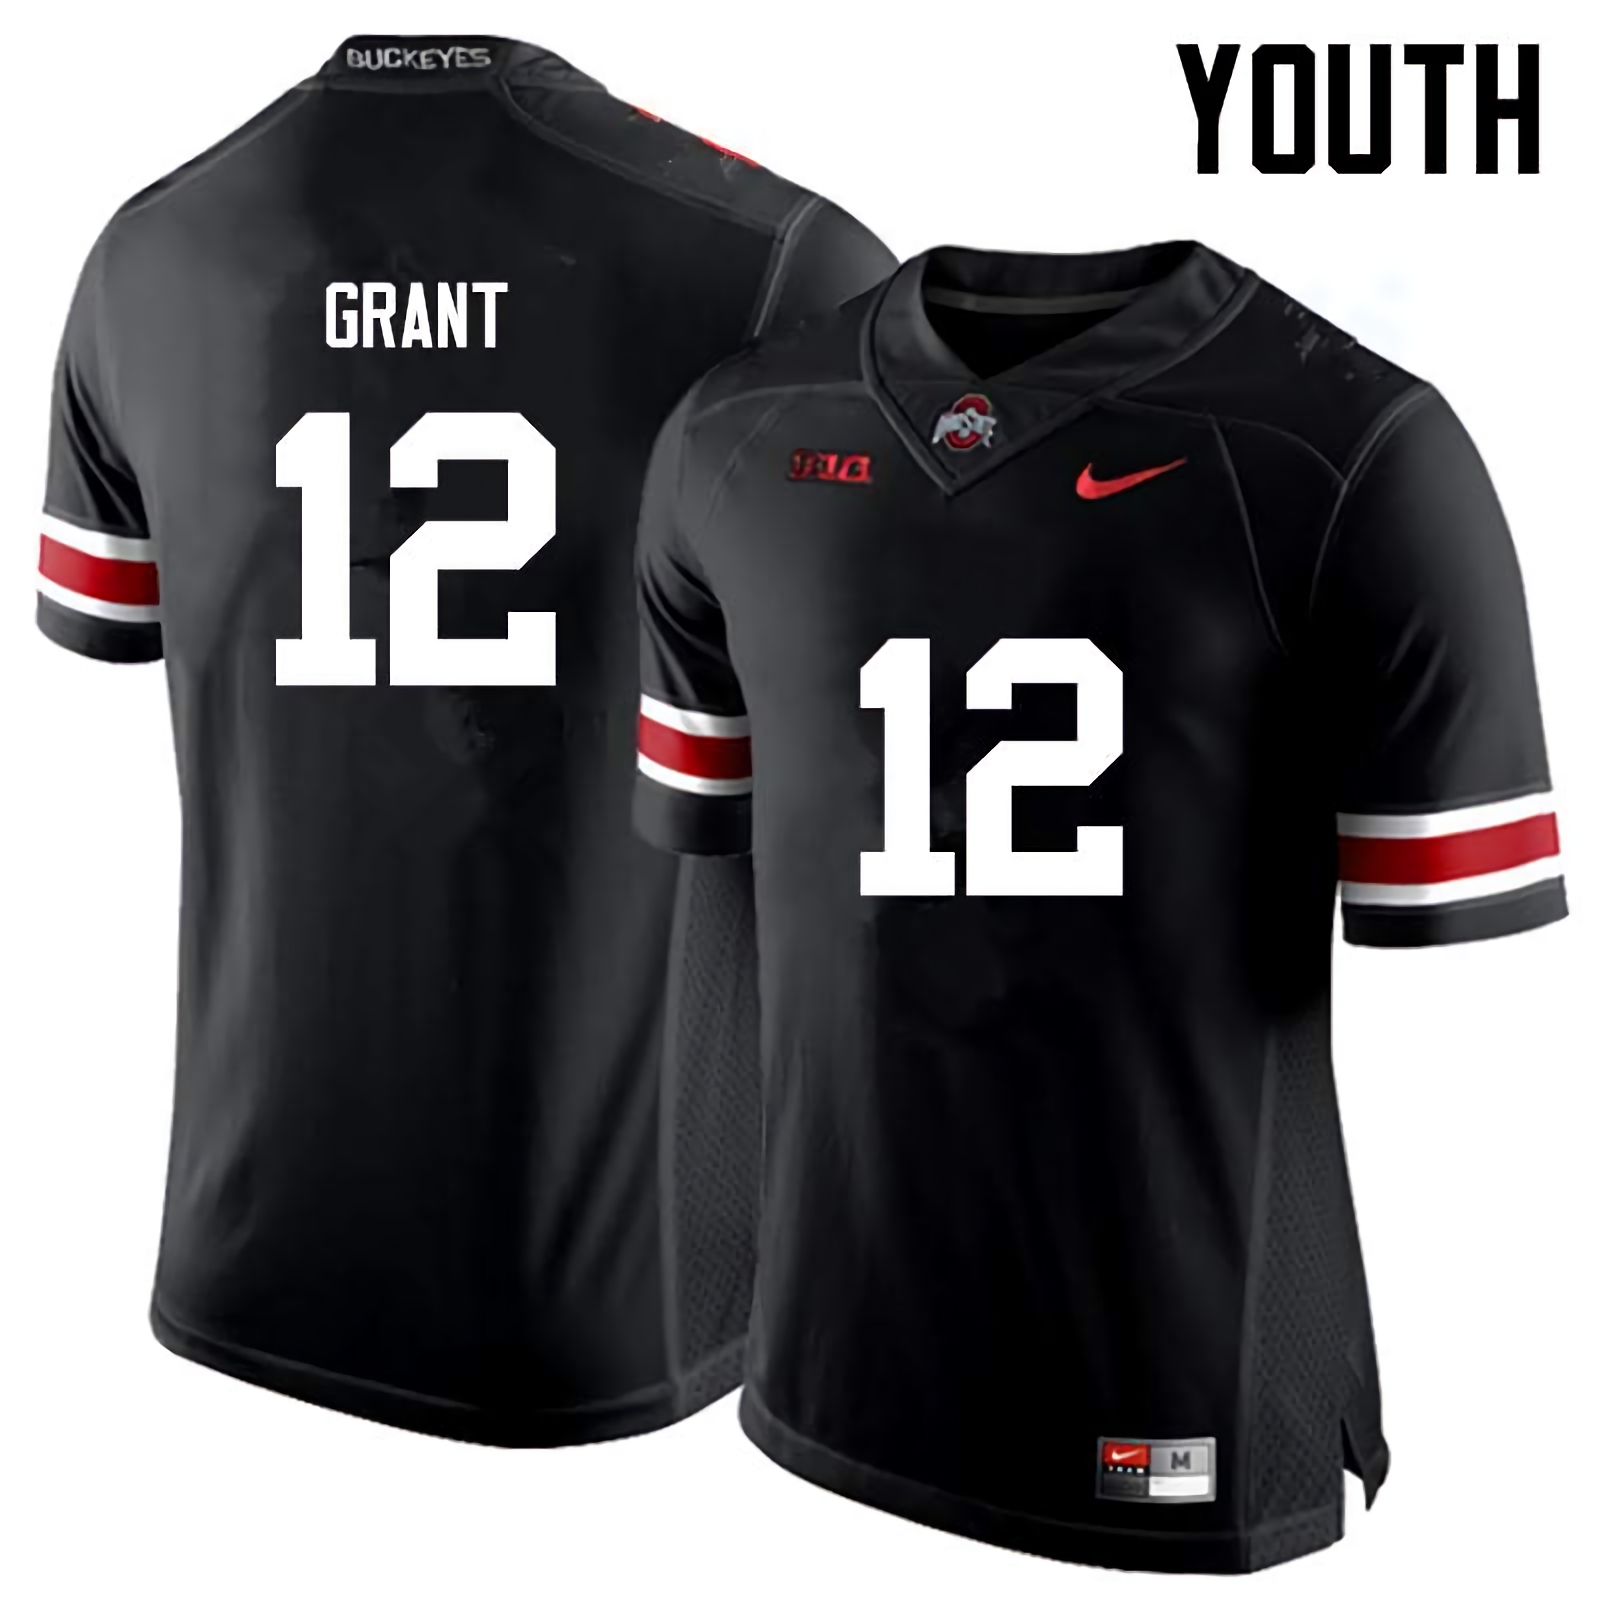 Doran Grant Ohio State Buckeyes Youth NCAA #12 Nike Black College Stitched Football Jersey MVU0856YL